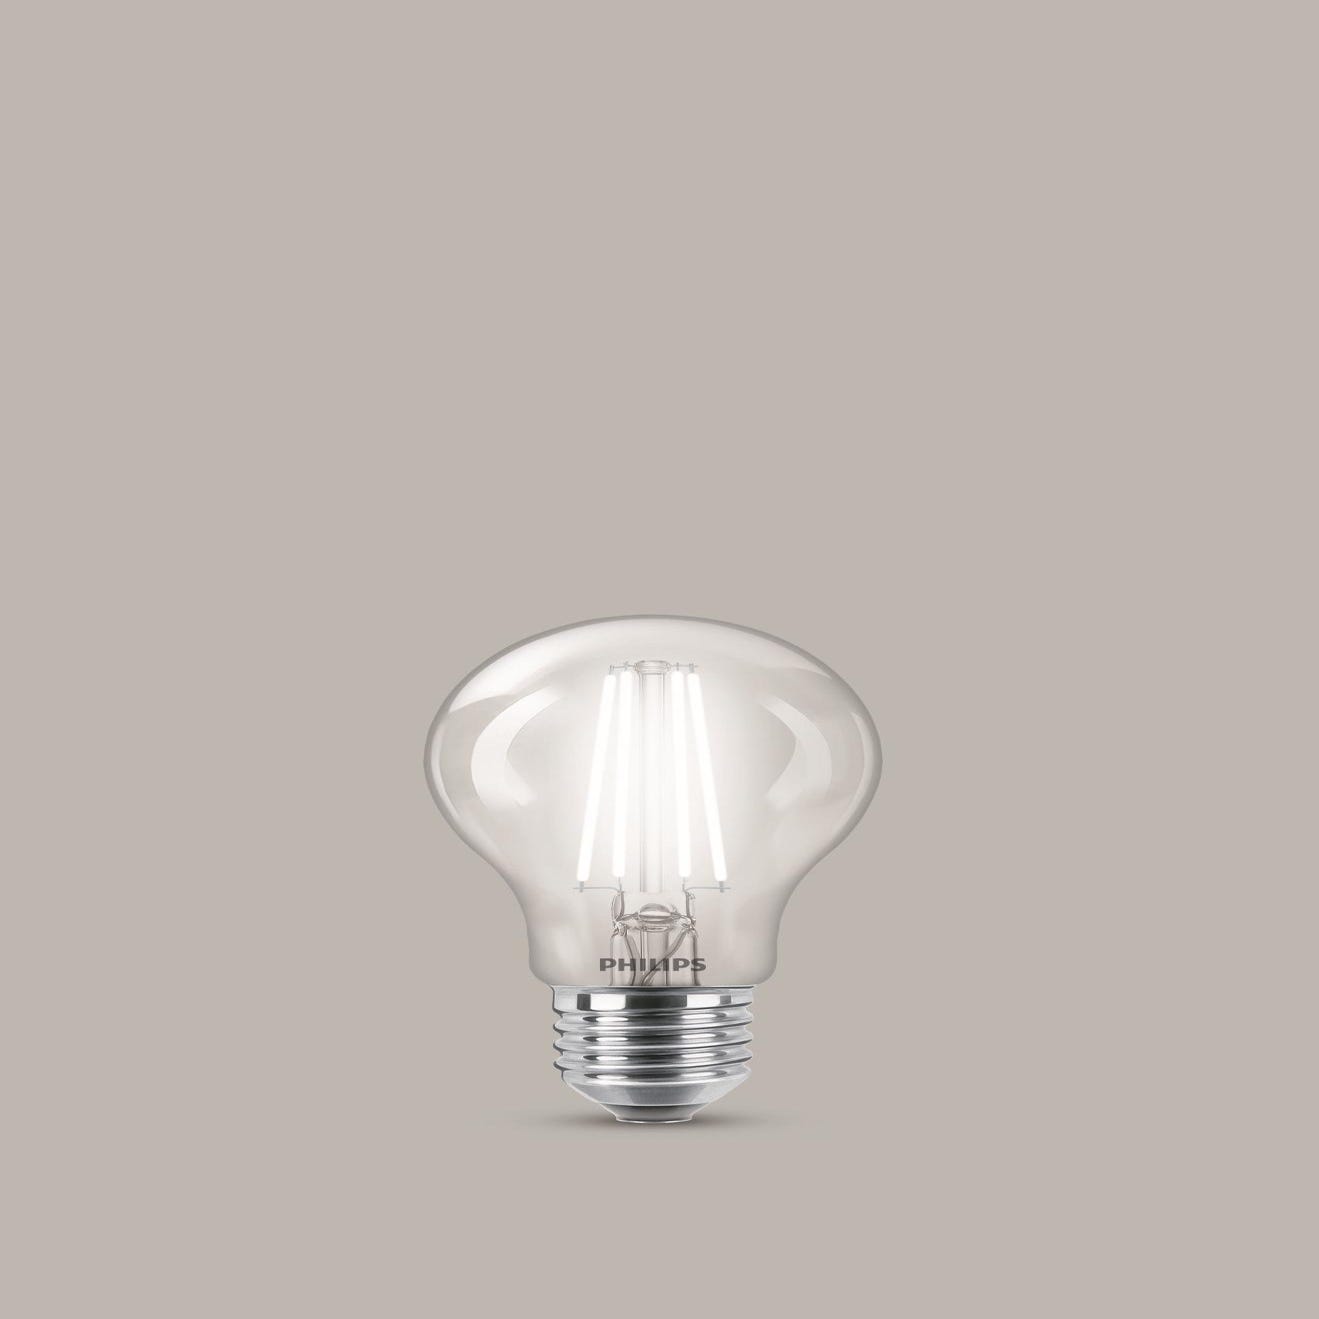 Philips Ampoule LED standard E27 7W-60W blanc chaud 